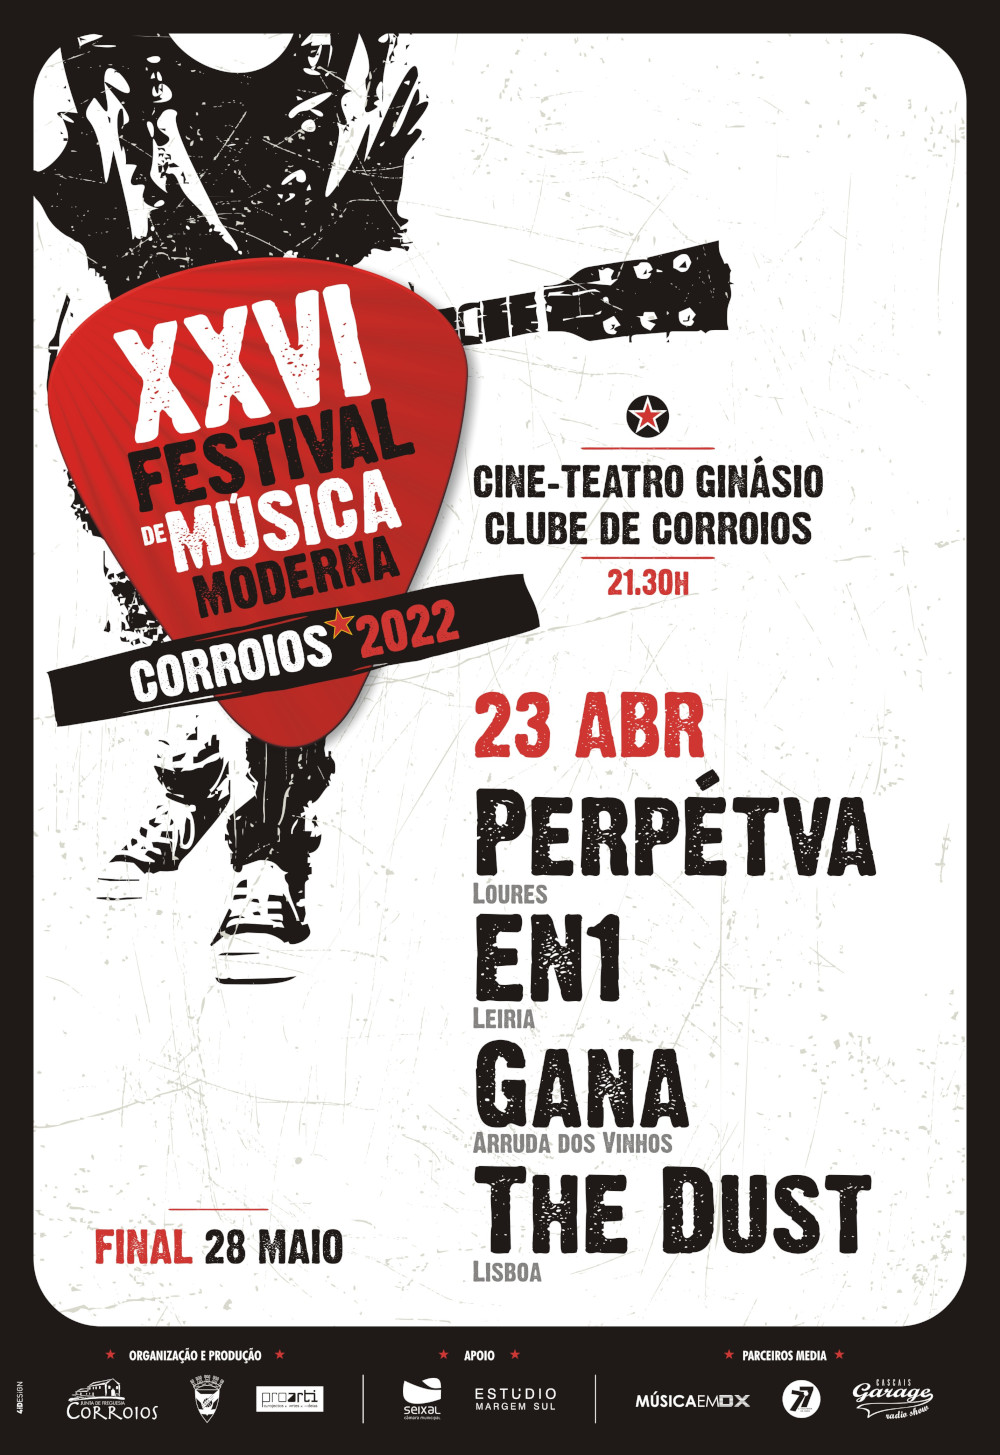 XXVI Festival de Música Moderna Corroios'2022 - 1ª Sessão